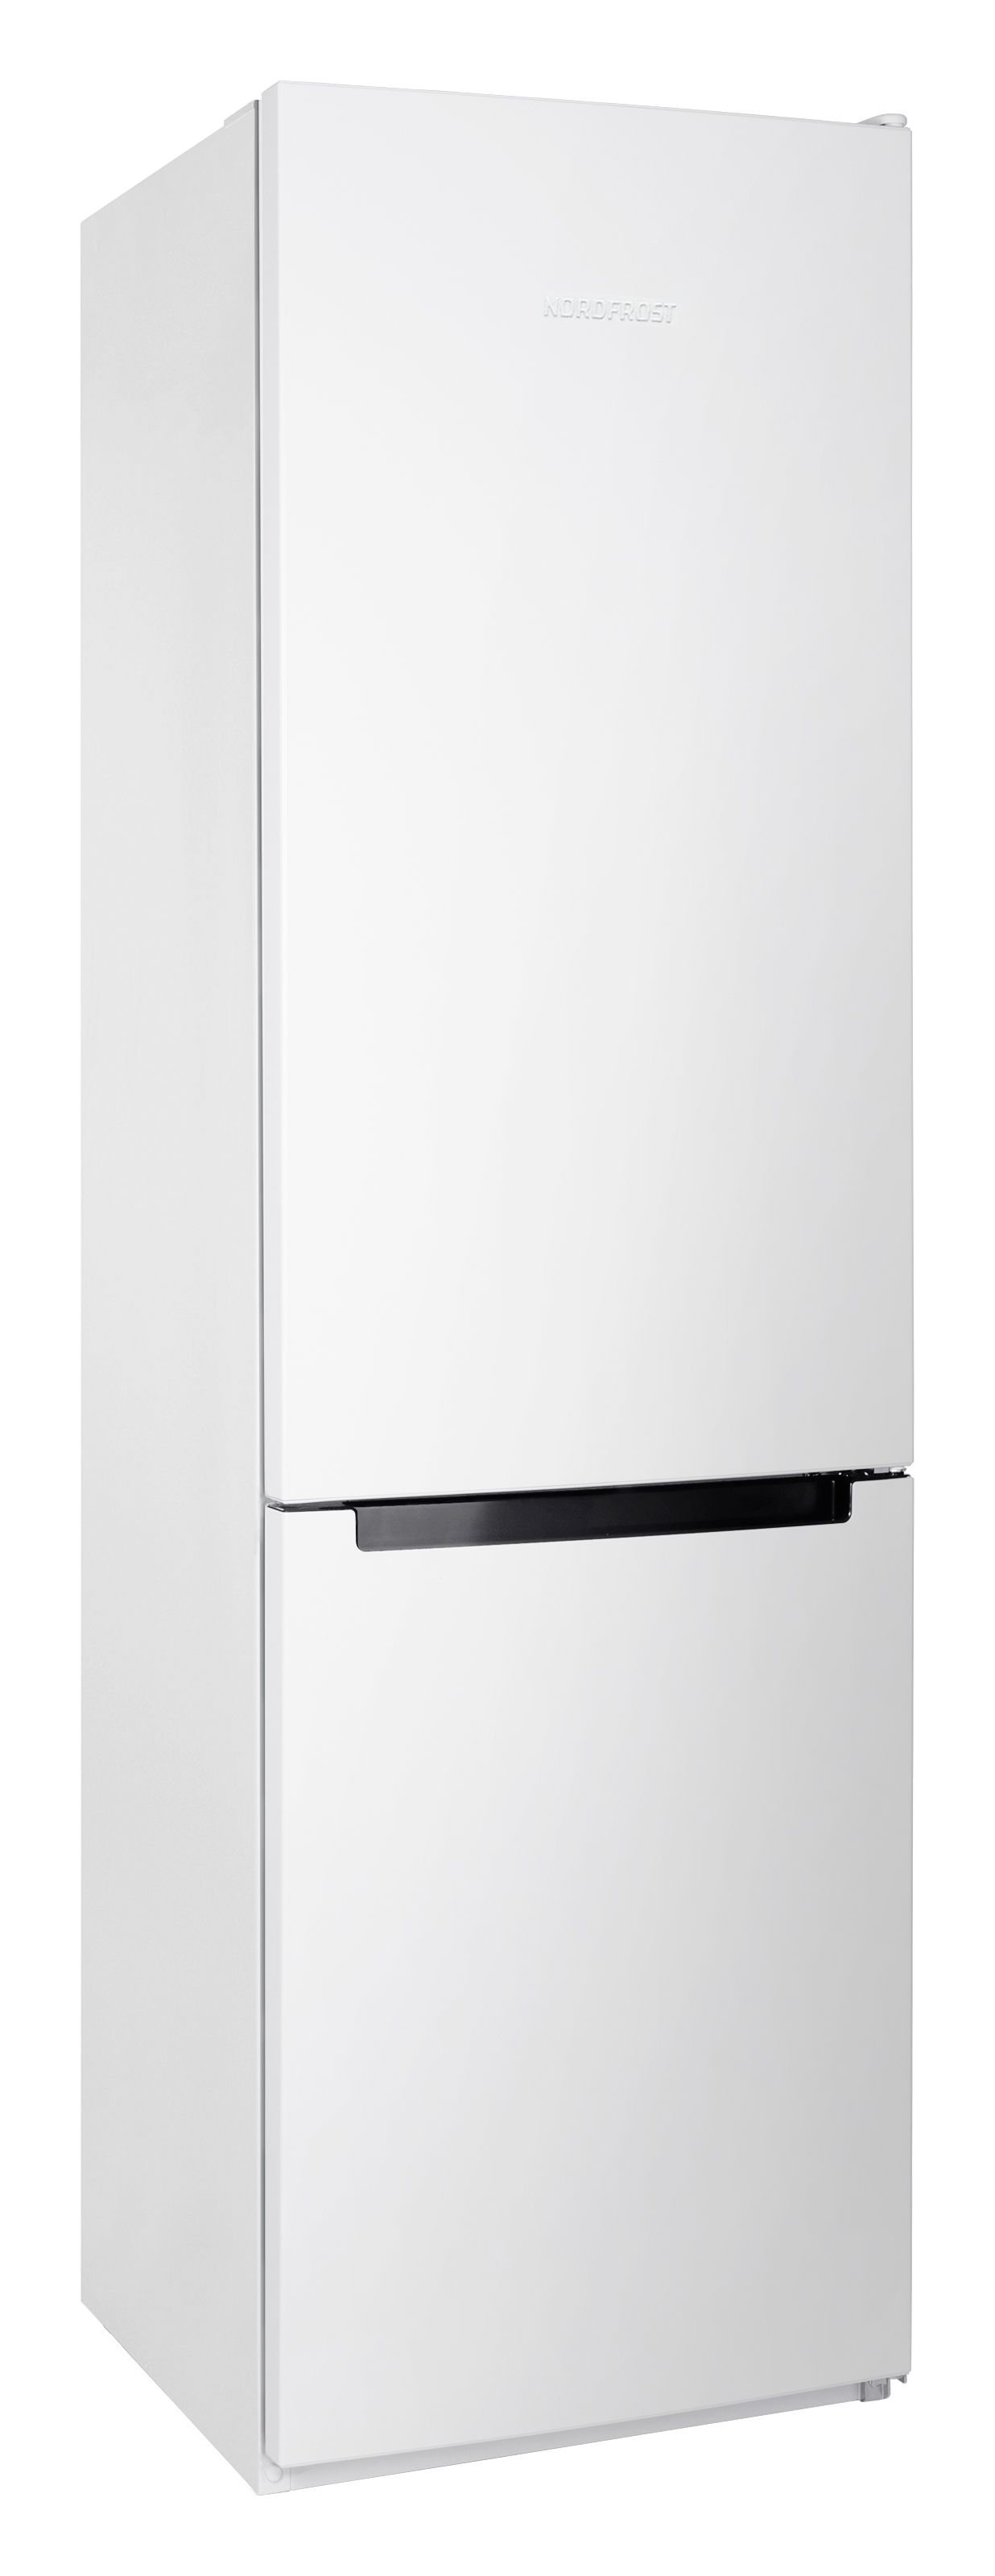 Холодильник NordFrost NRB 154 W белый двухкамерный холодильник nordfrost nrb 124 w